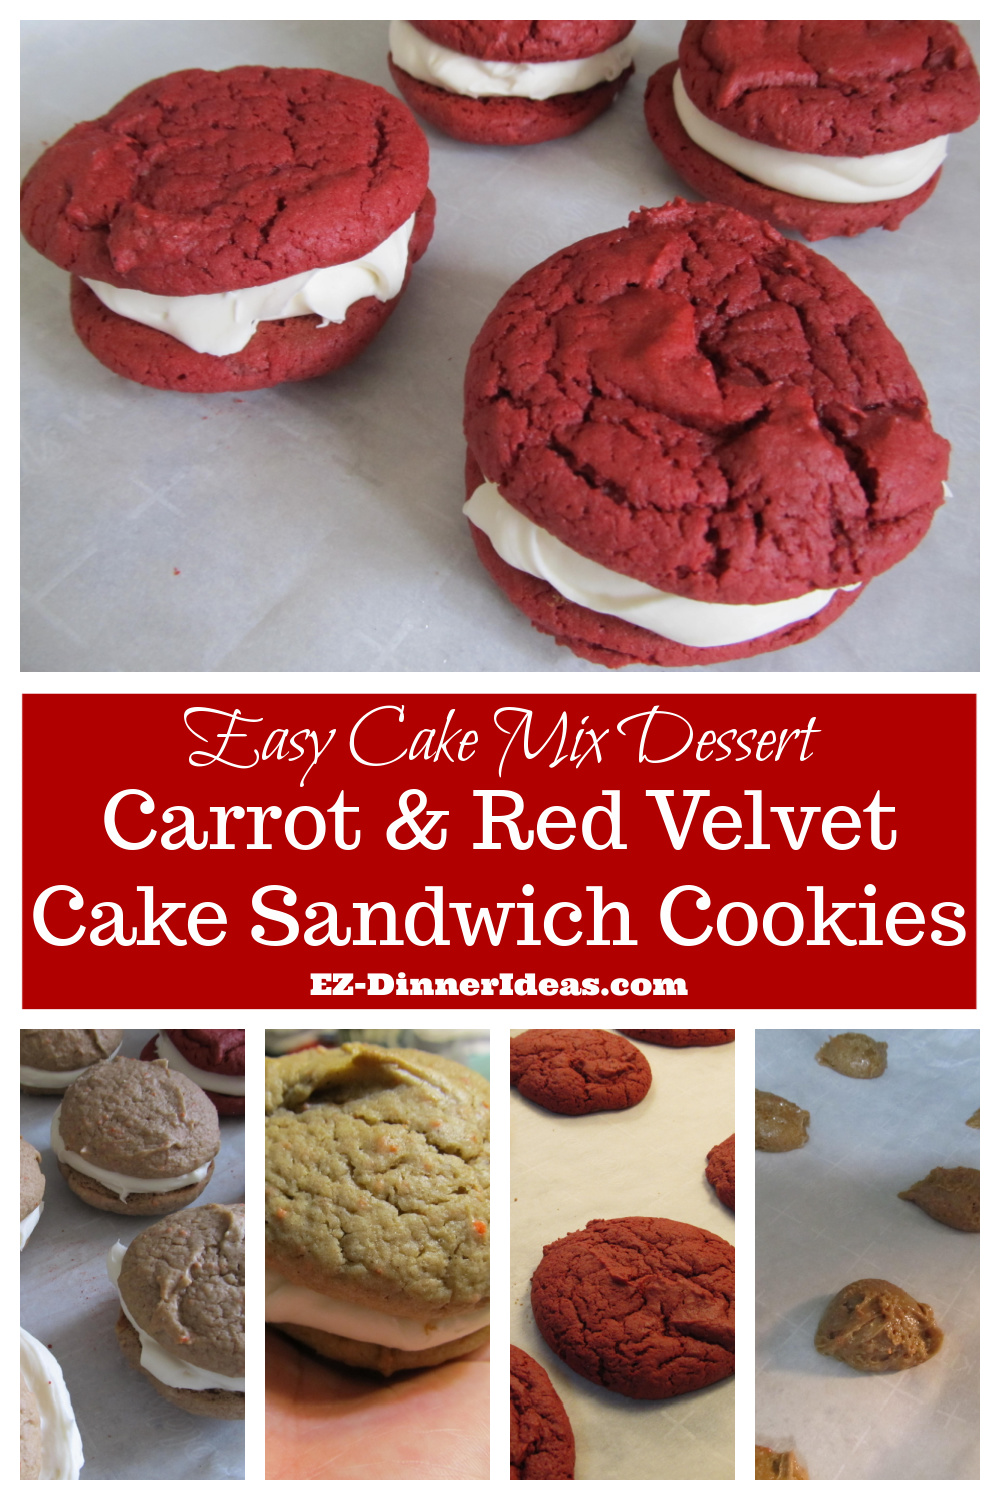 Red Velvet Sandwich Cookies Recipe | Food Network Kitchen | Food Network